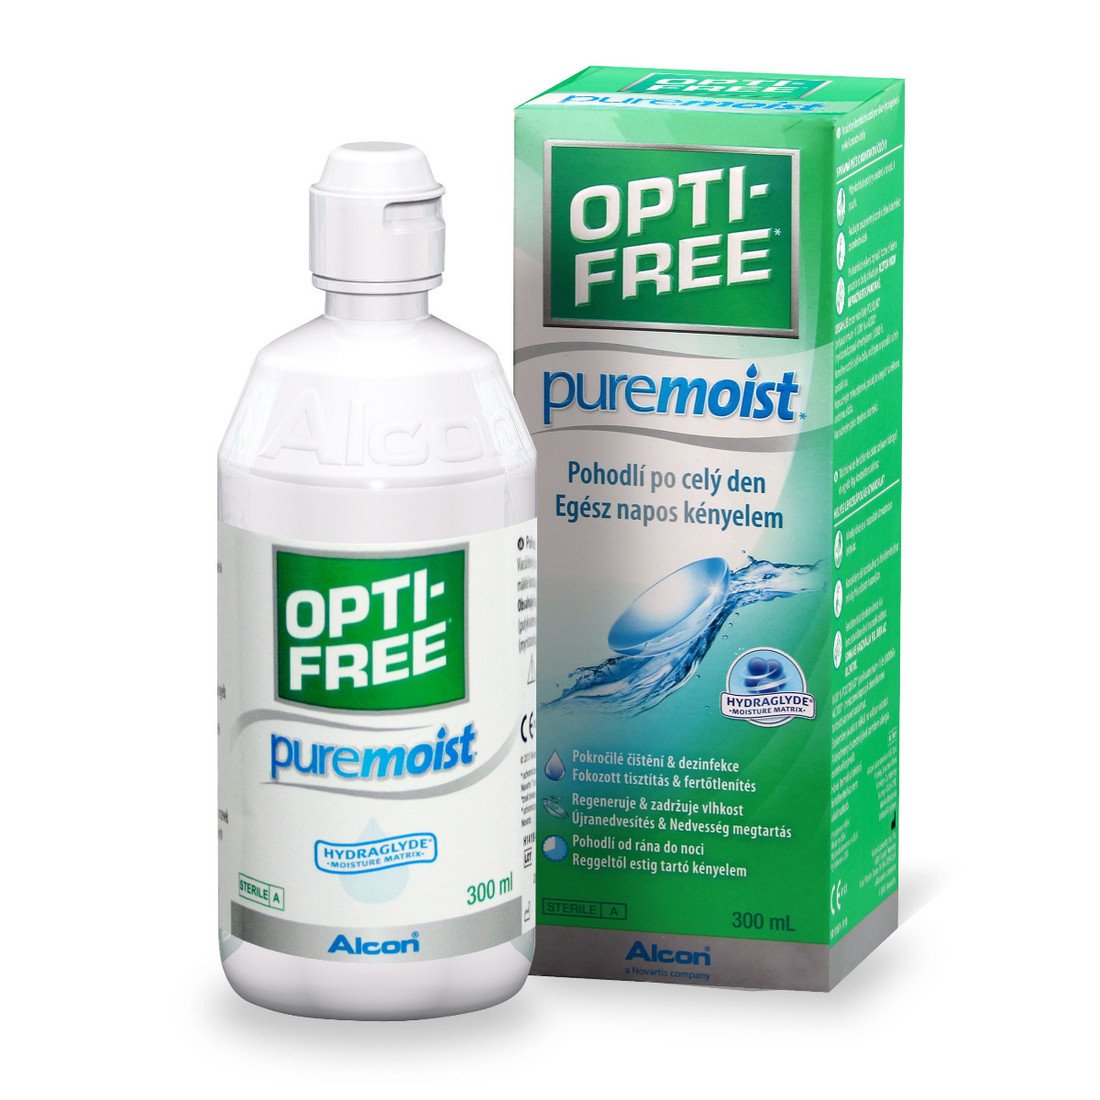 Alcon Pharmaceuticals OPTI FREE Pure Moist 300 ml